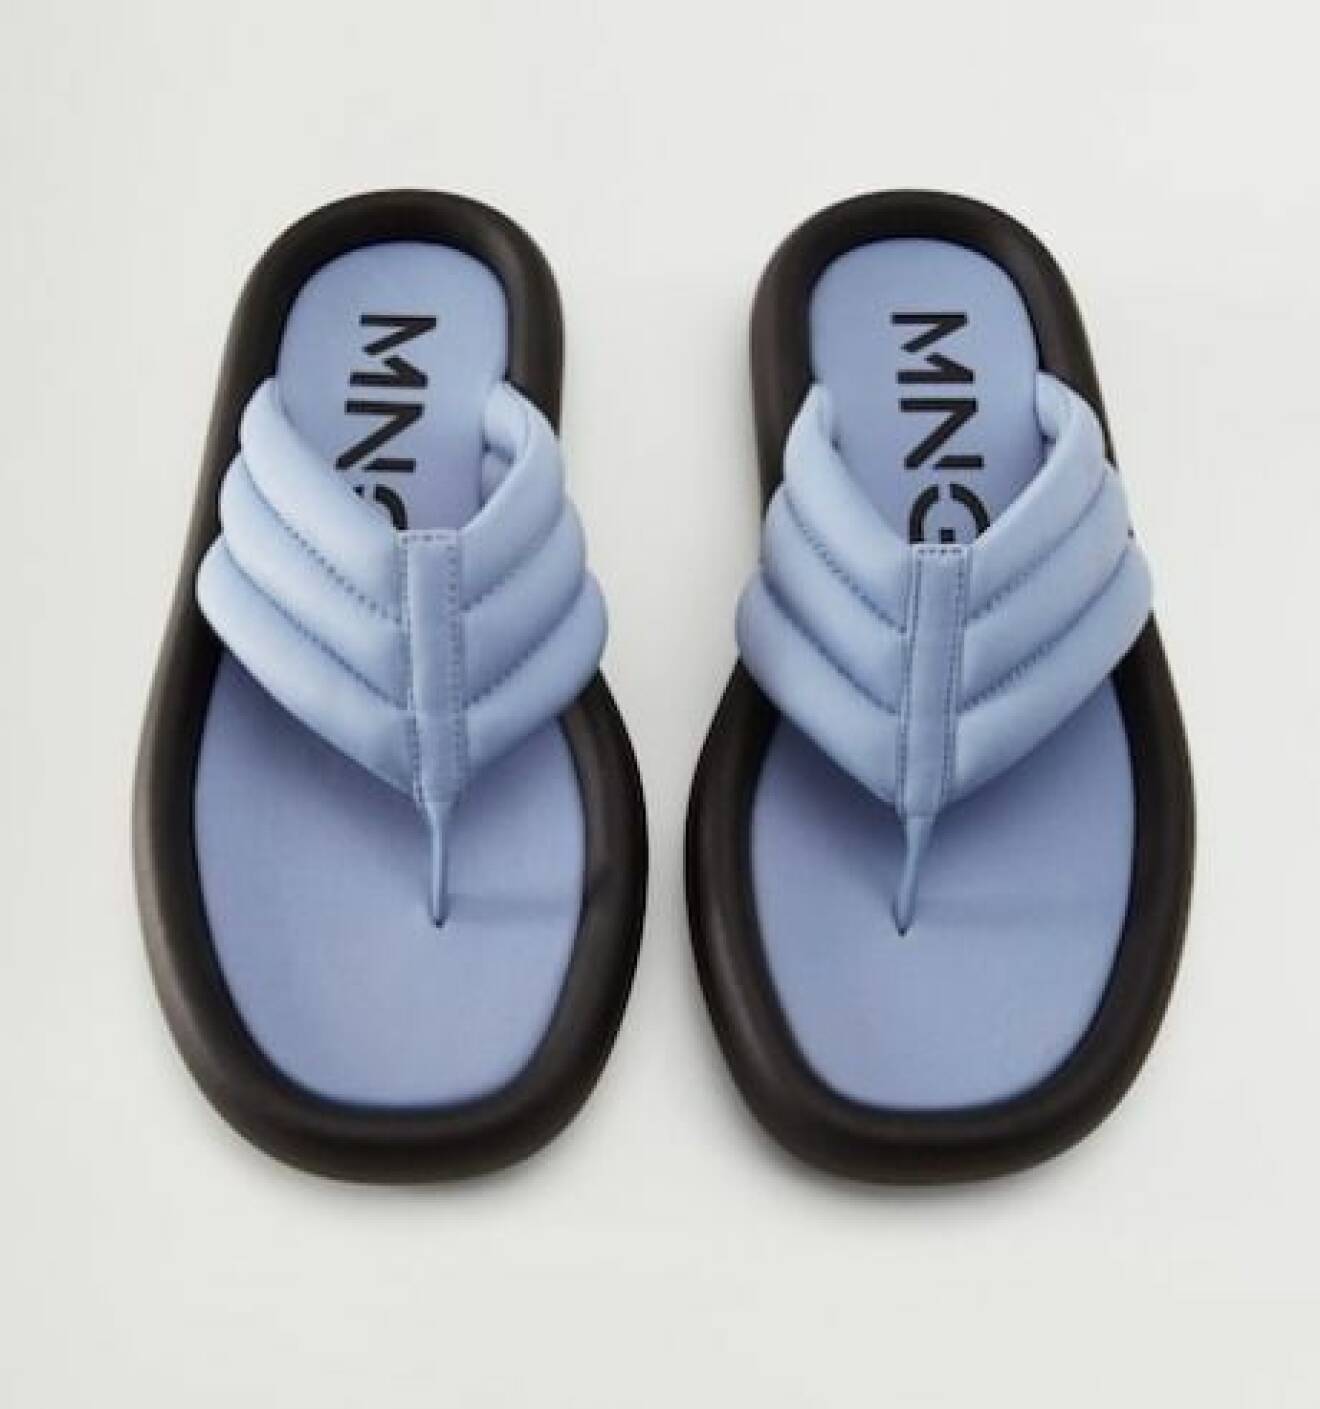 Ljusblå sandaler i flip-flop modell. Sandaler från Mango.